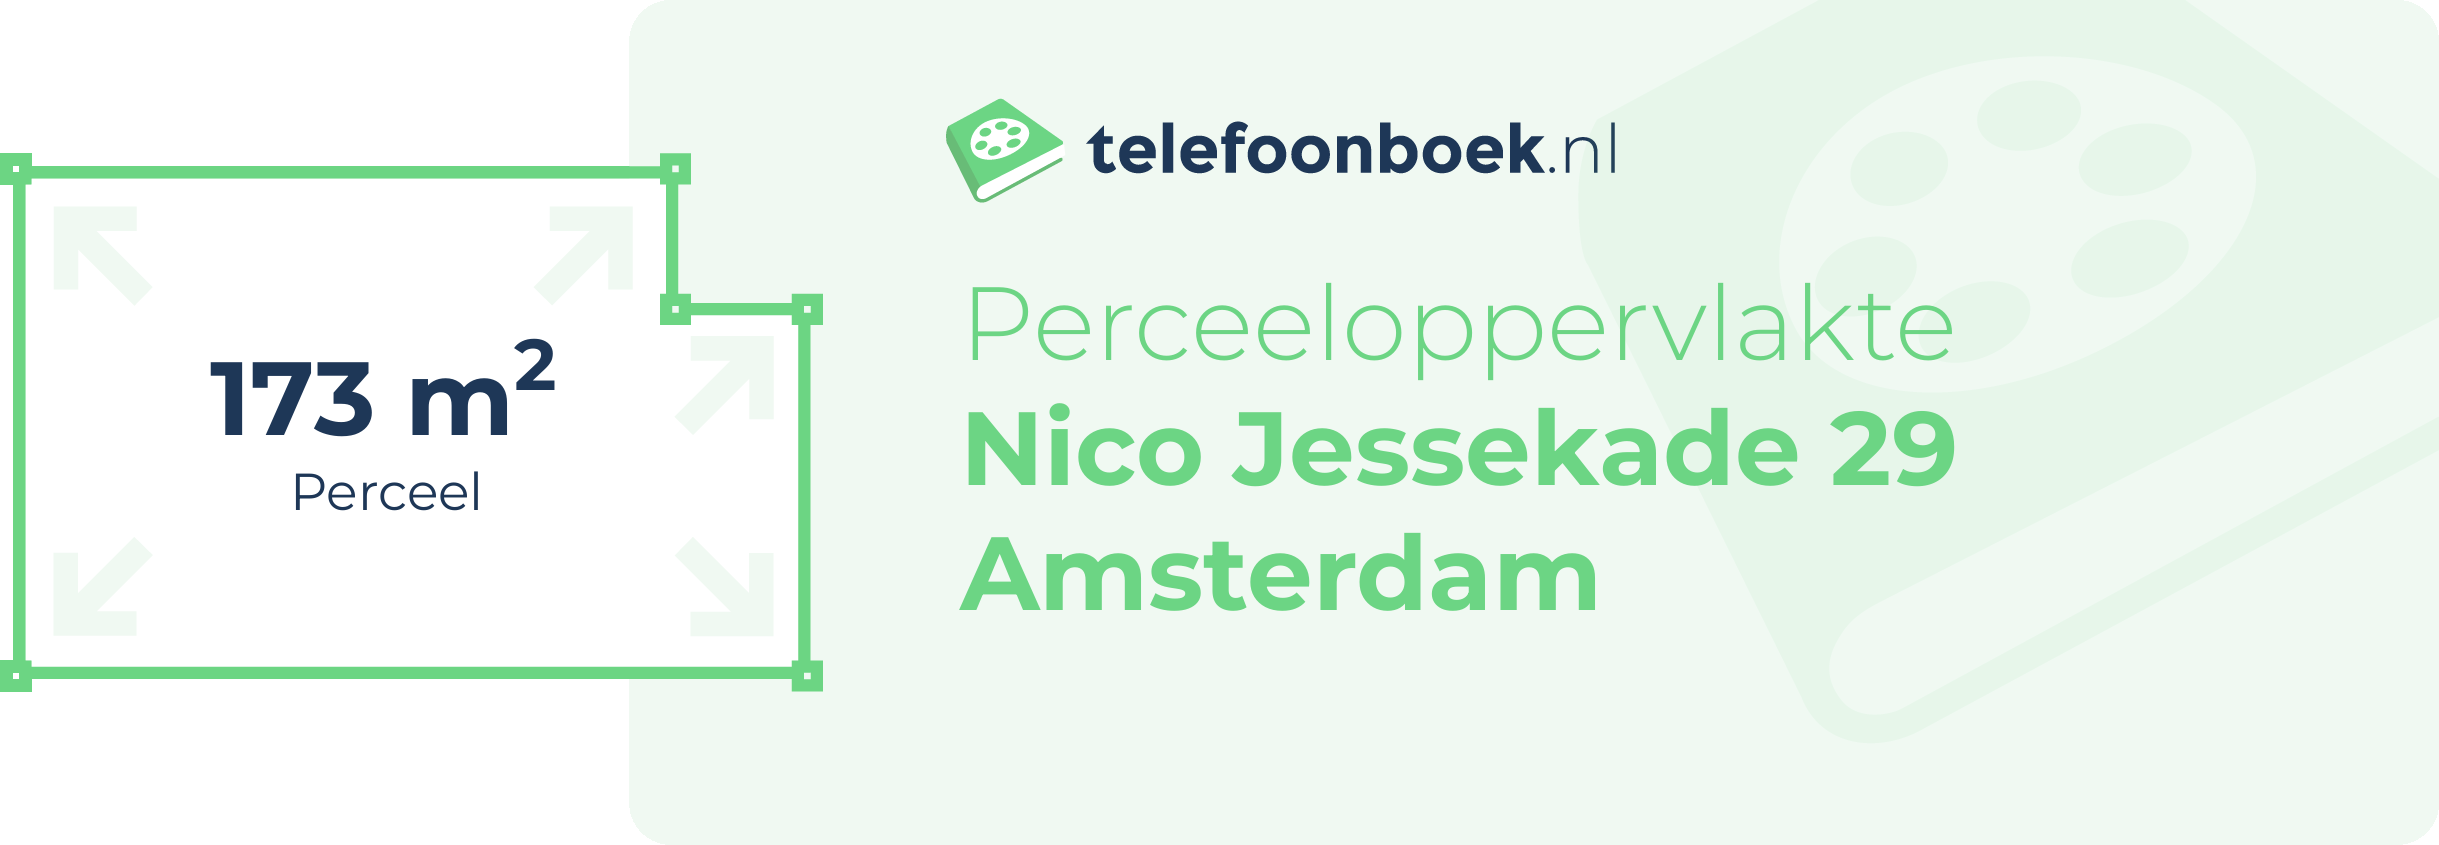 Perceeloppervlakte Nico Jessekade 29 Amsterdam